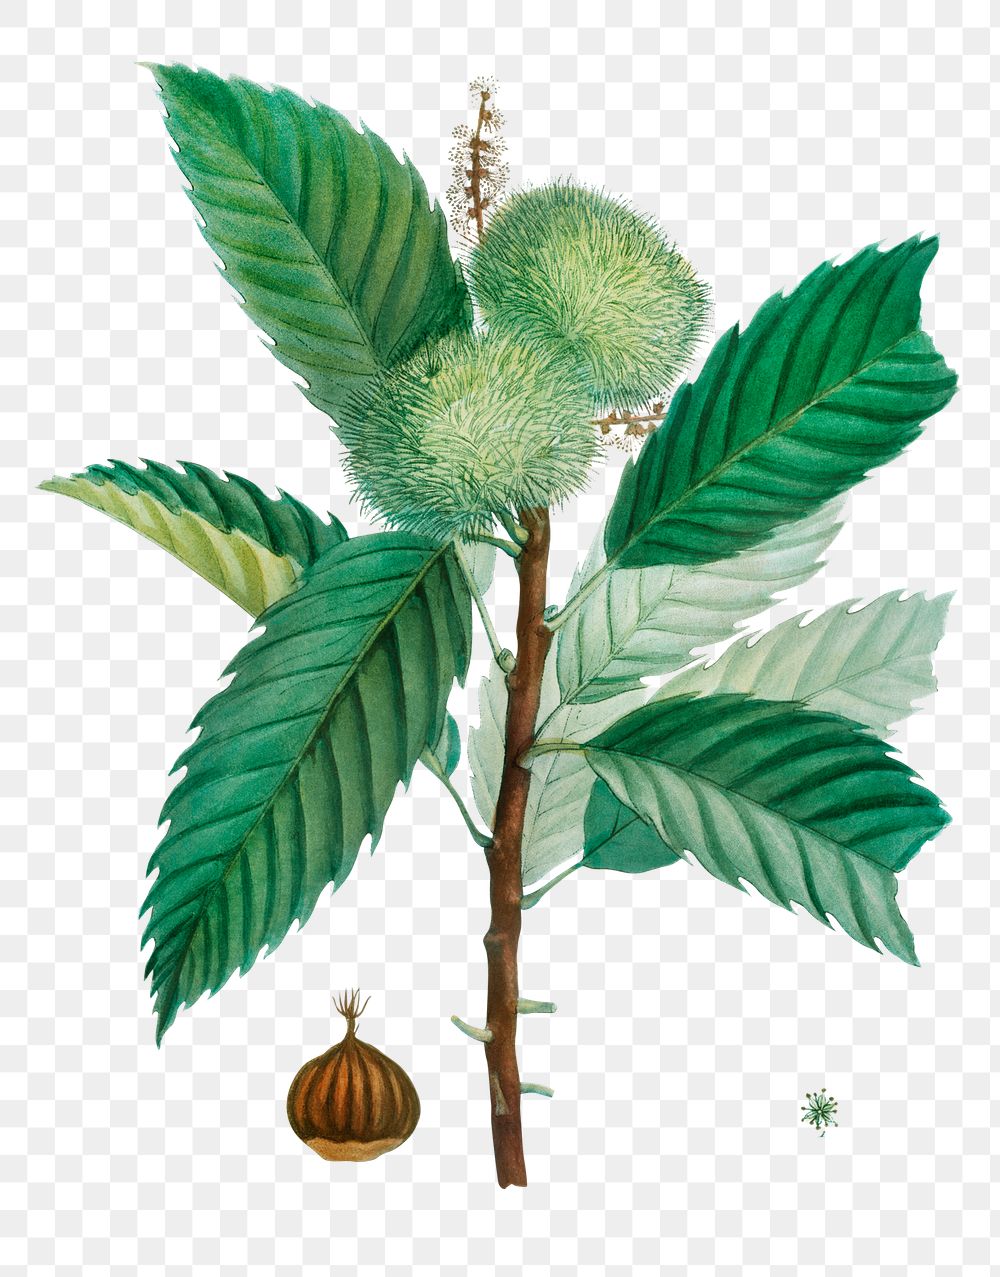 Sweet chestnut plant transparent png